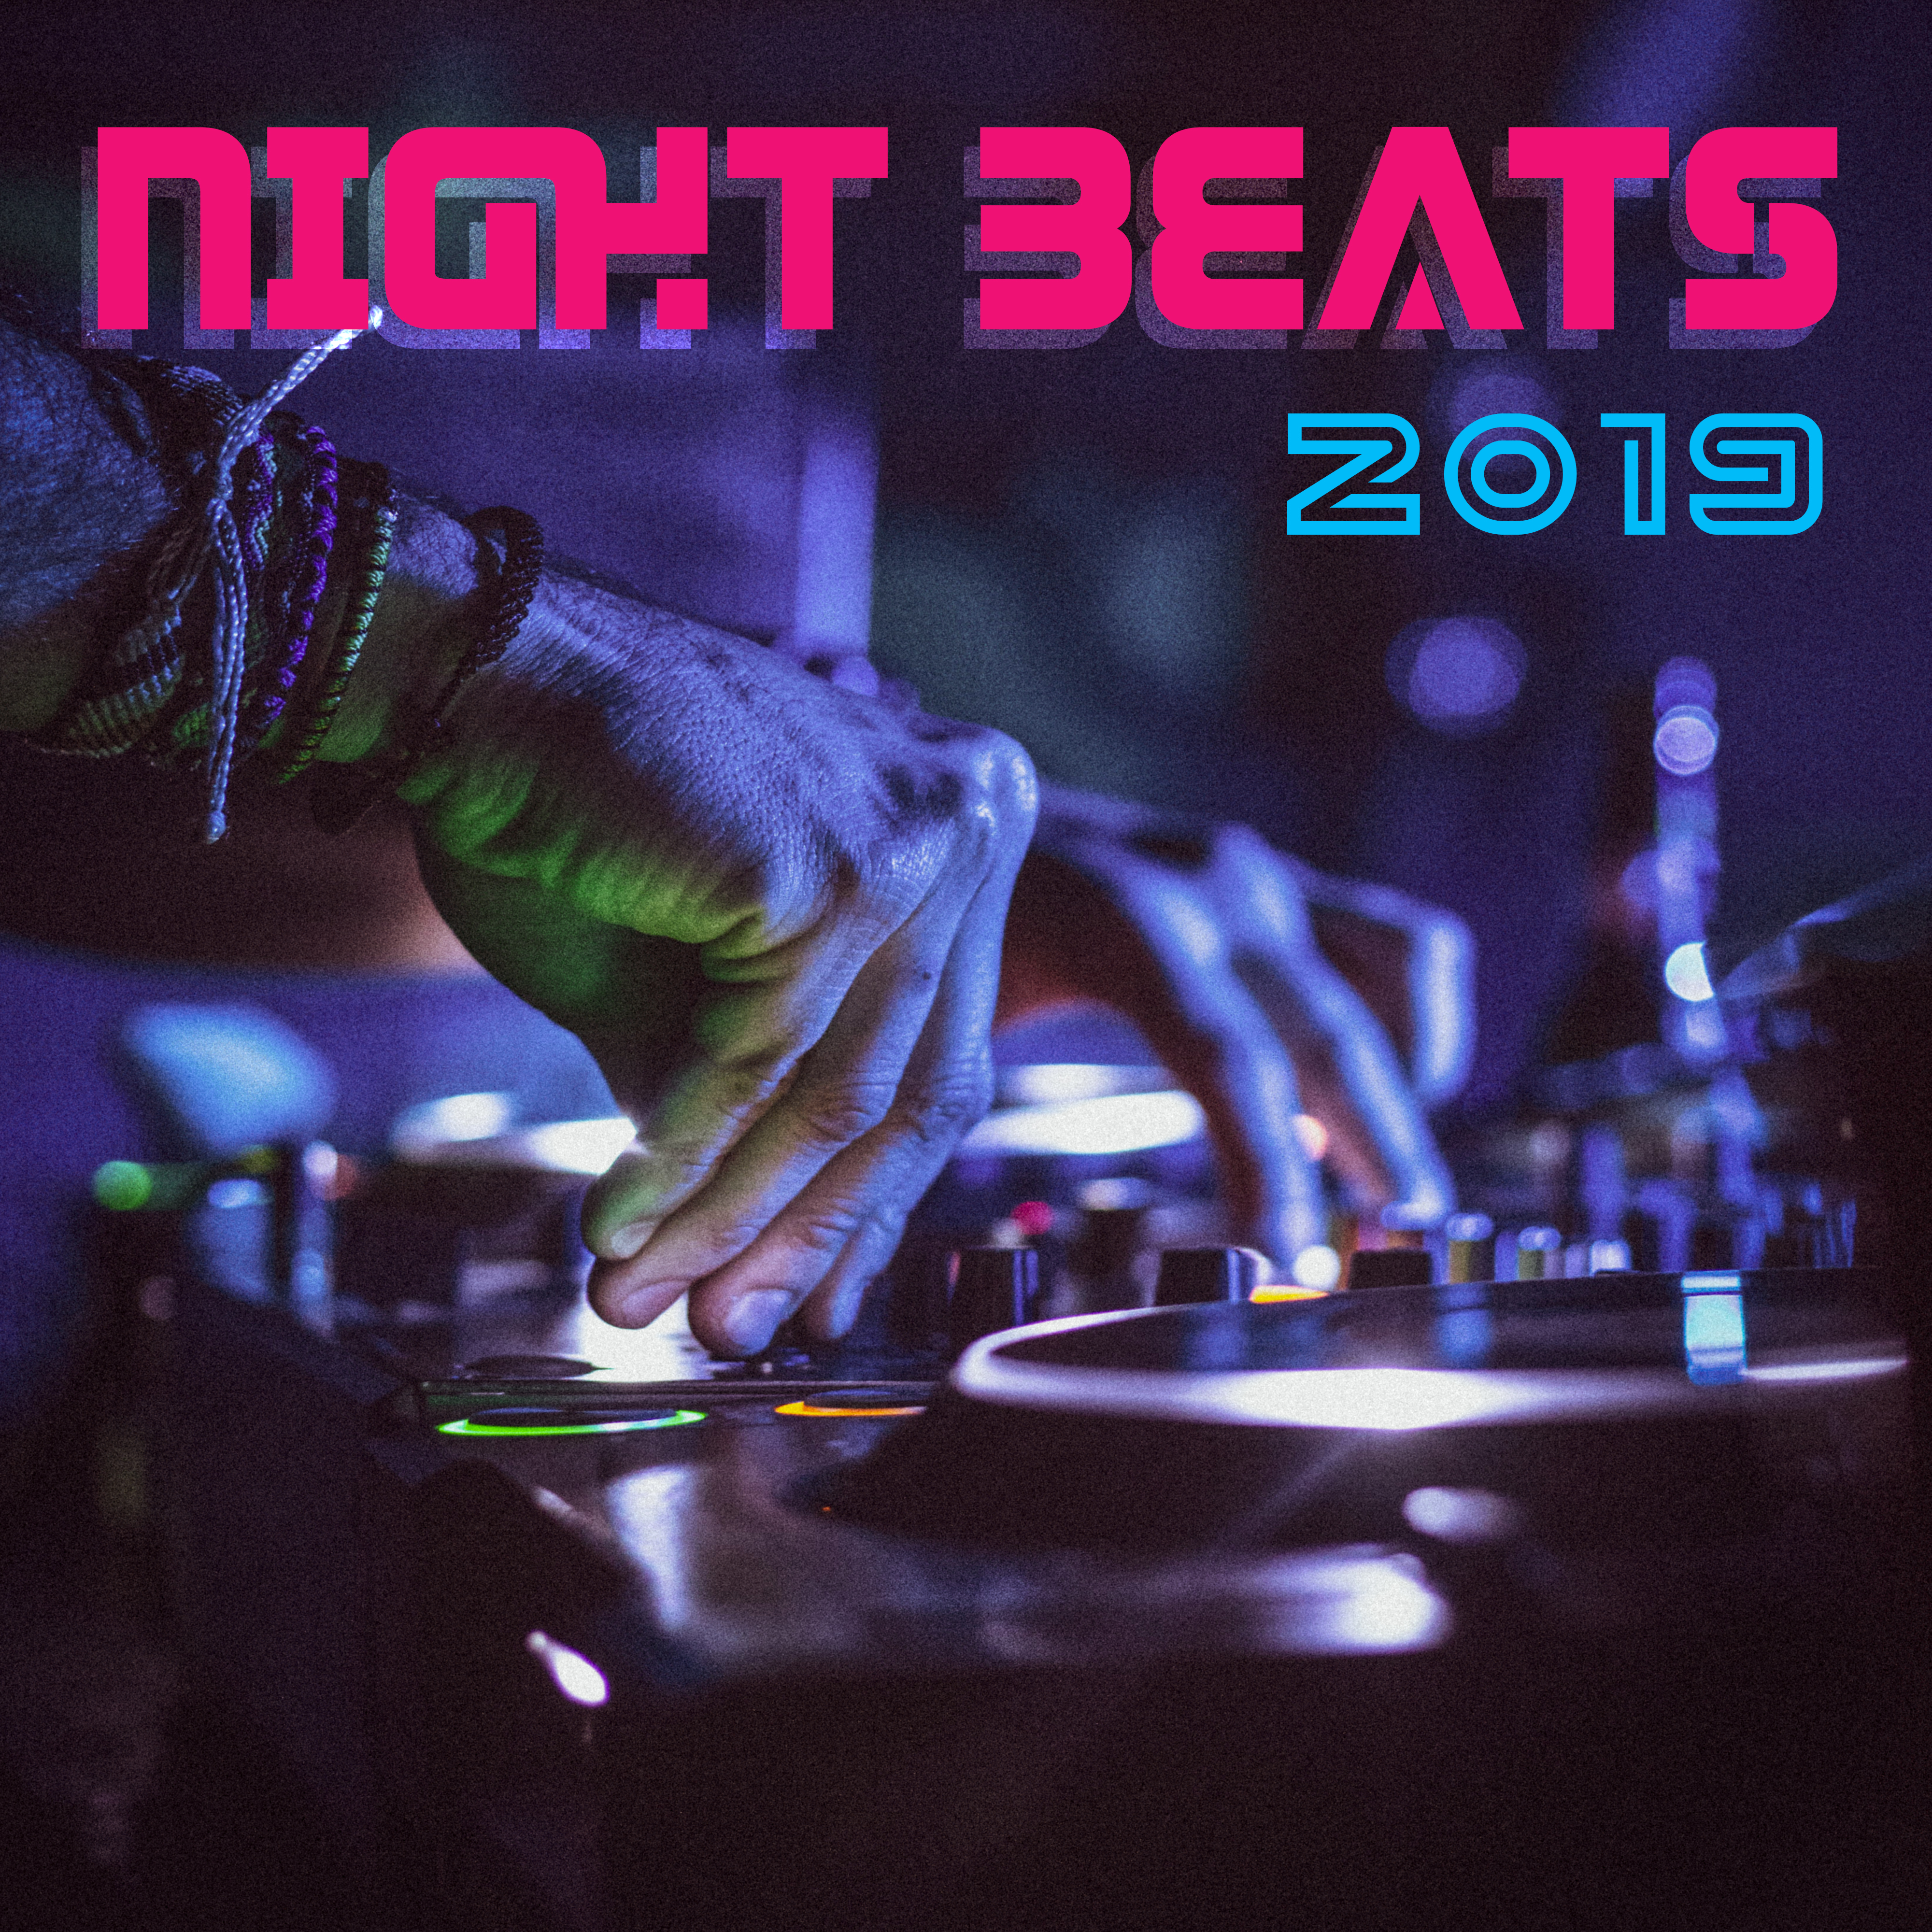 Night Beats 2019 - Electronic Mix of Deepest Club Rhythms